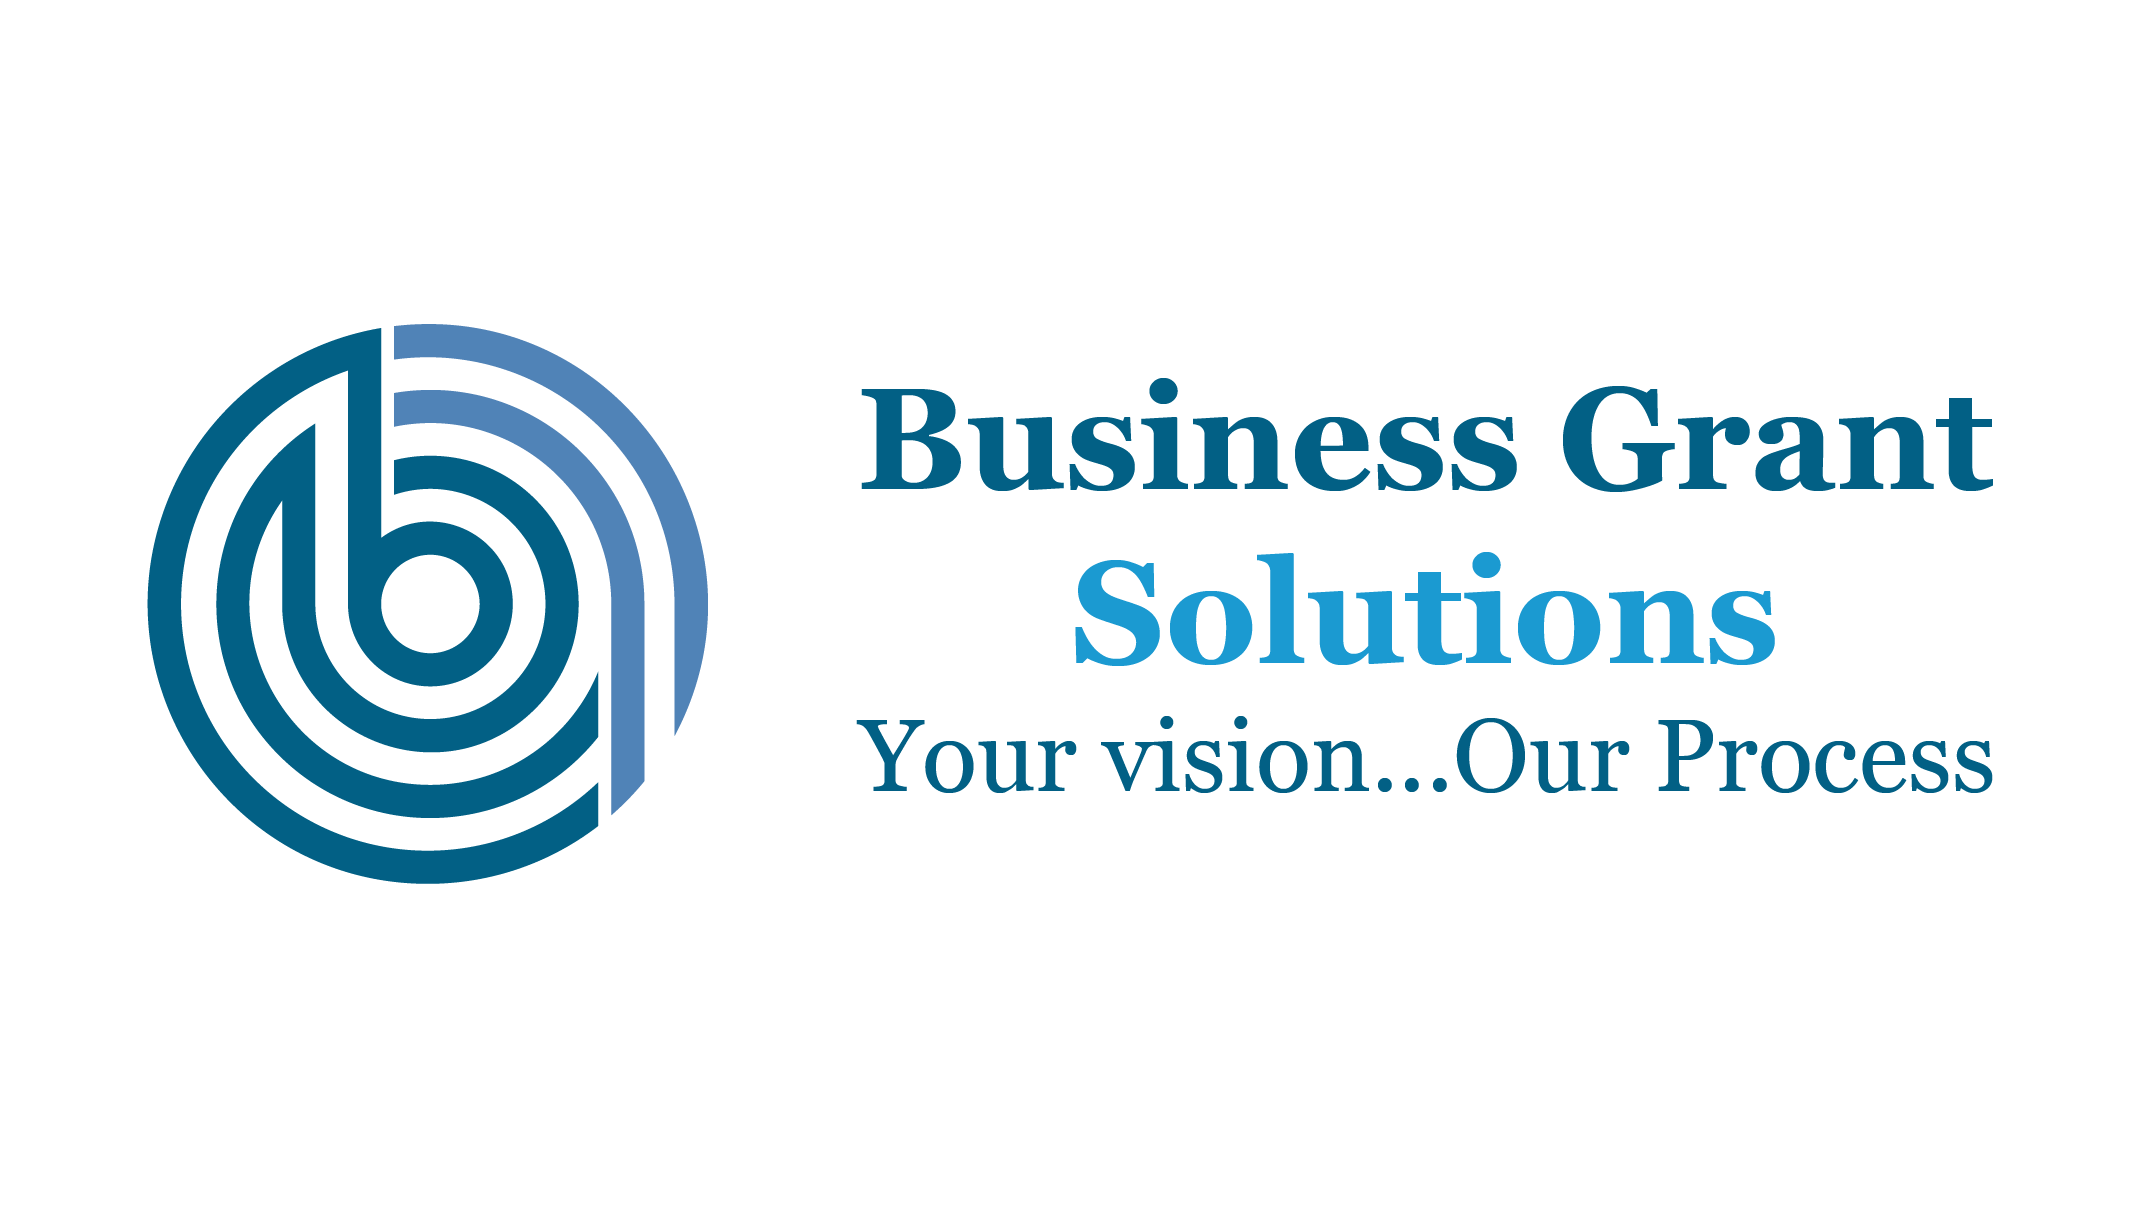 Business Grants Solutions Logo Design-01